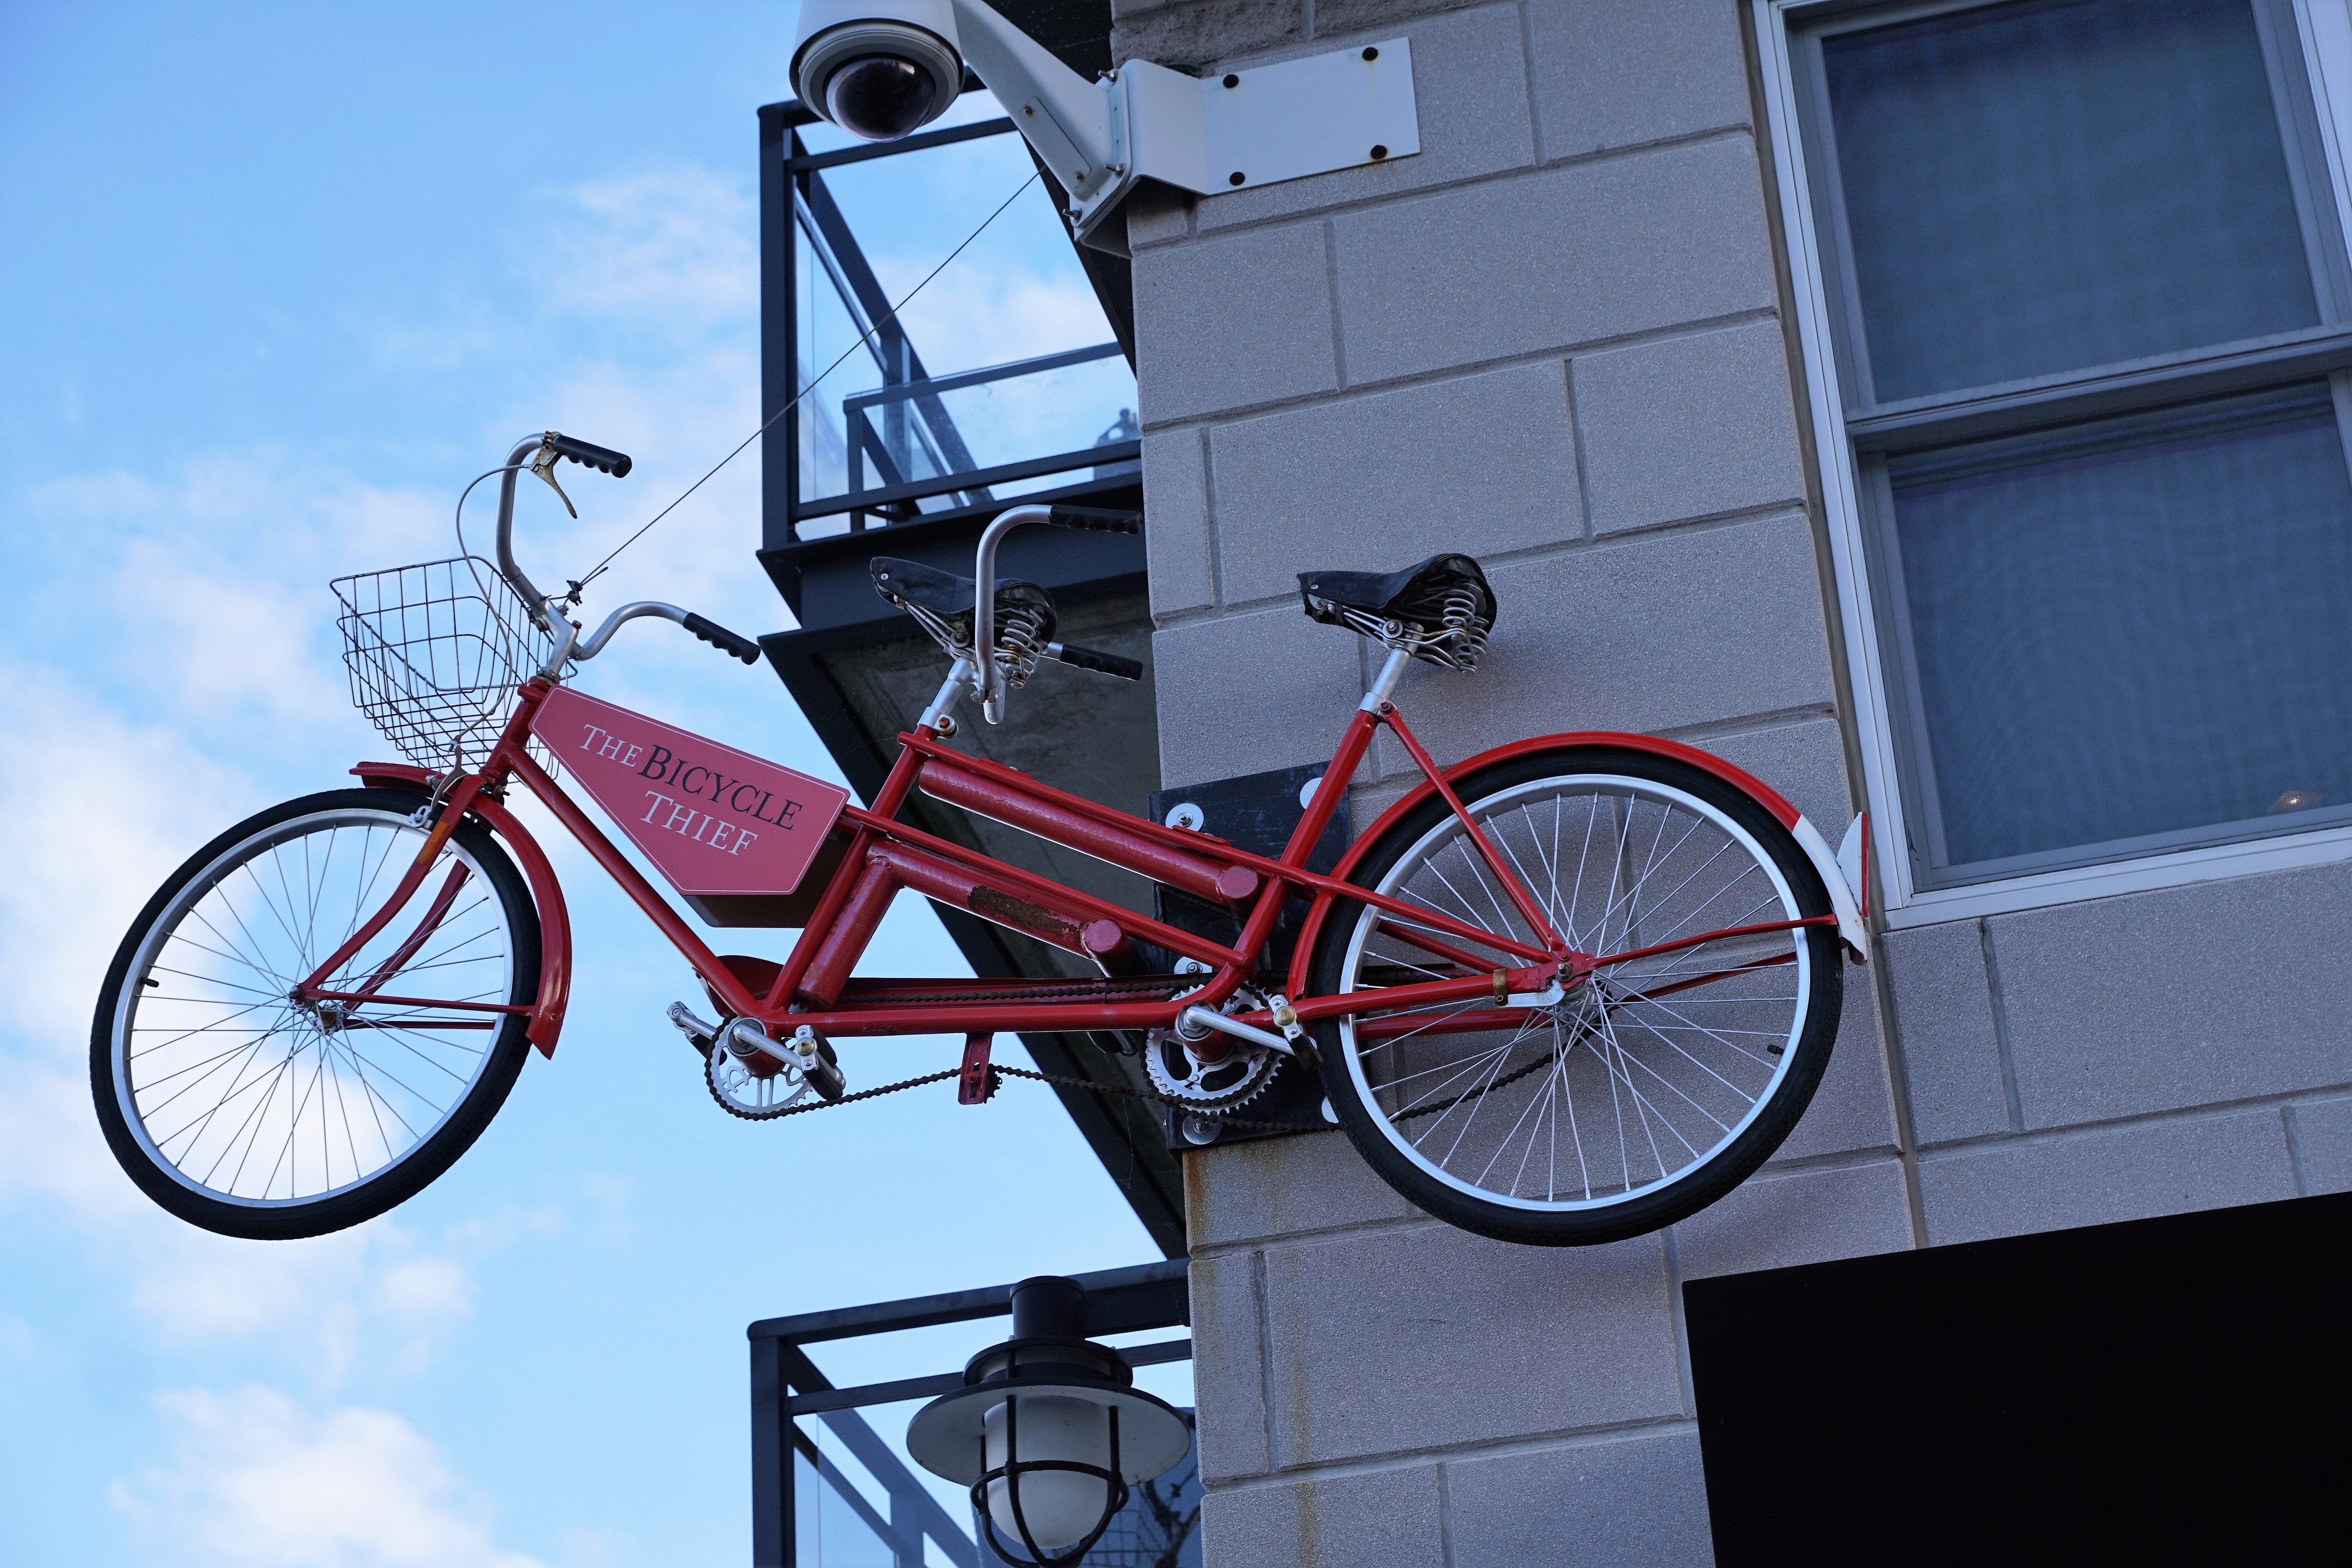 red tandem bike